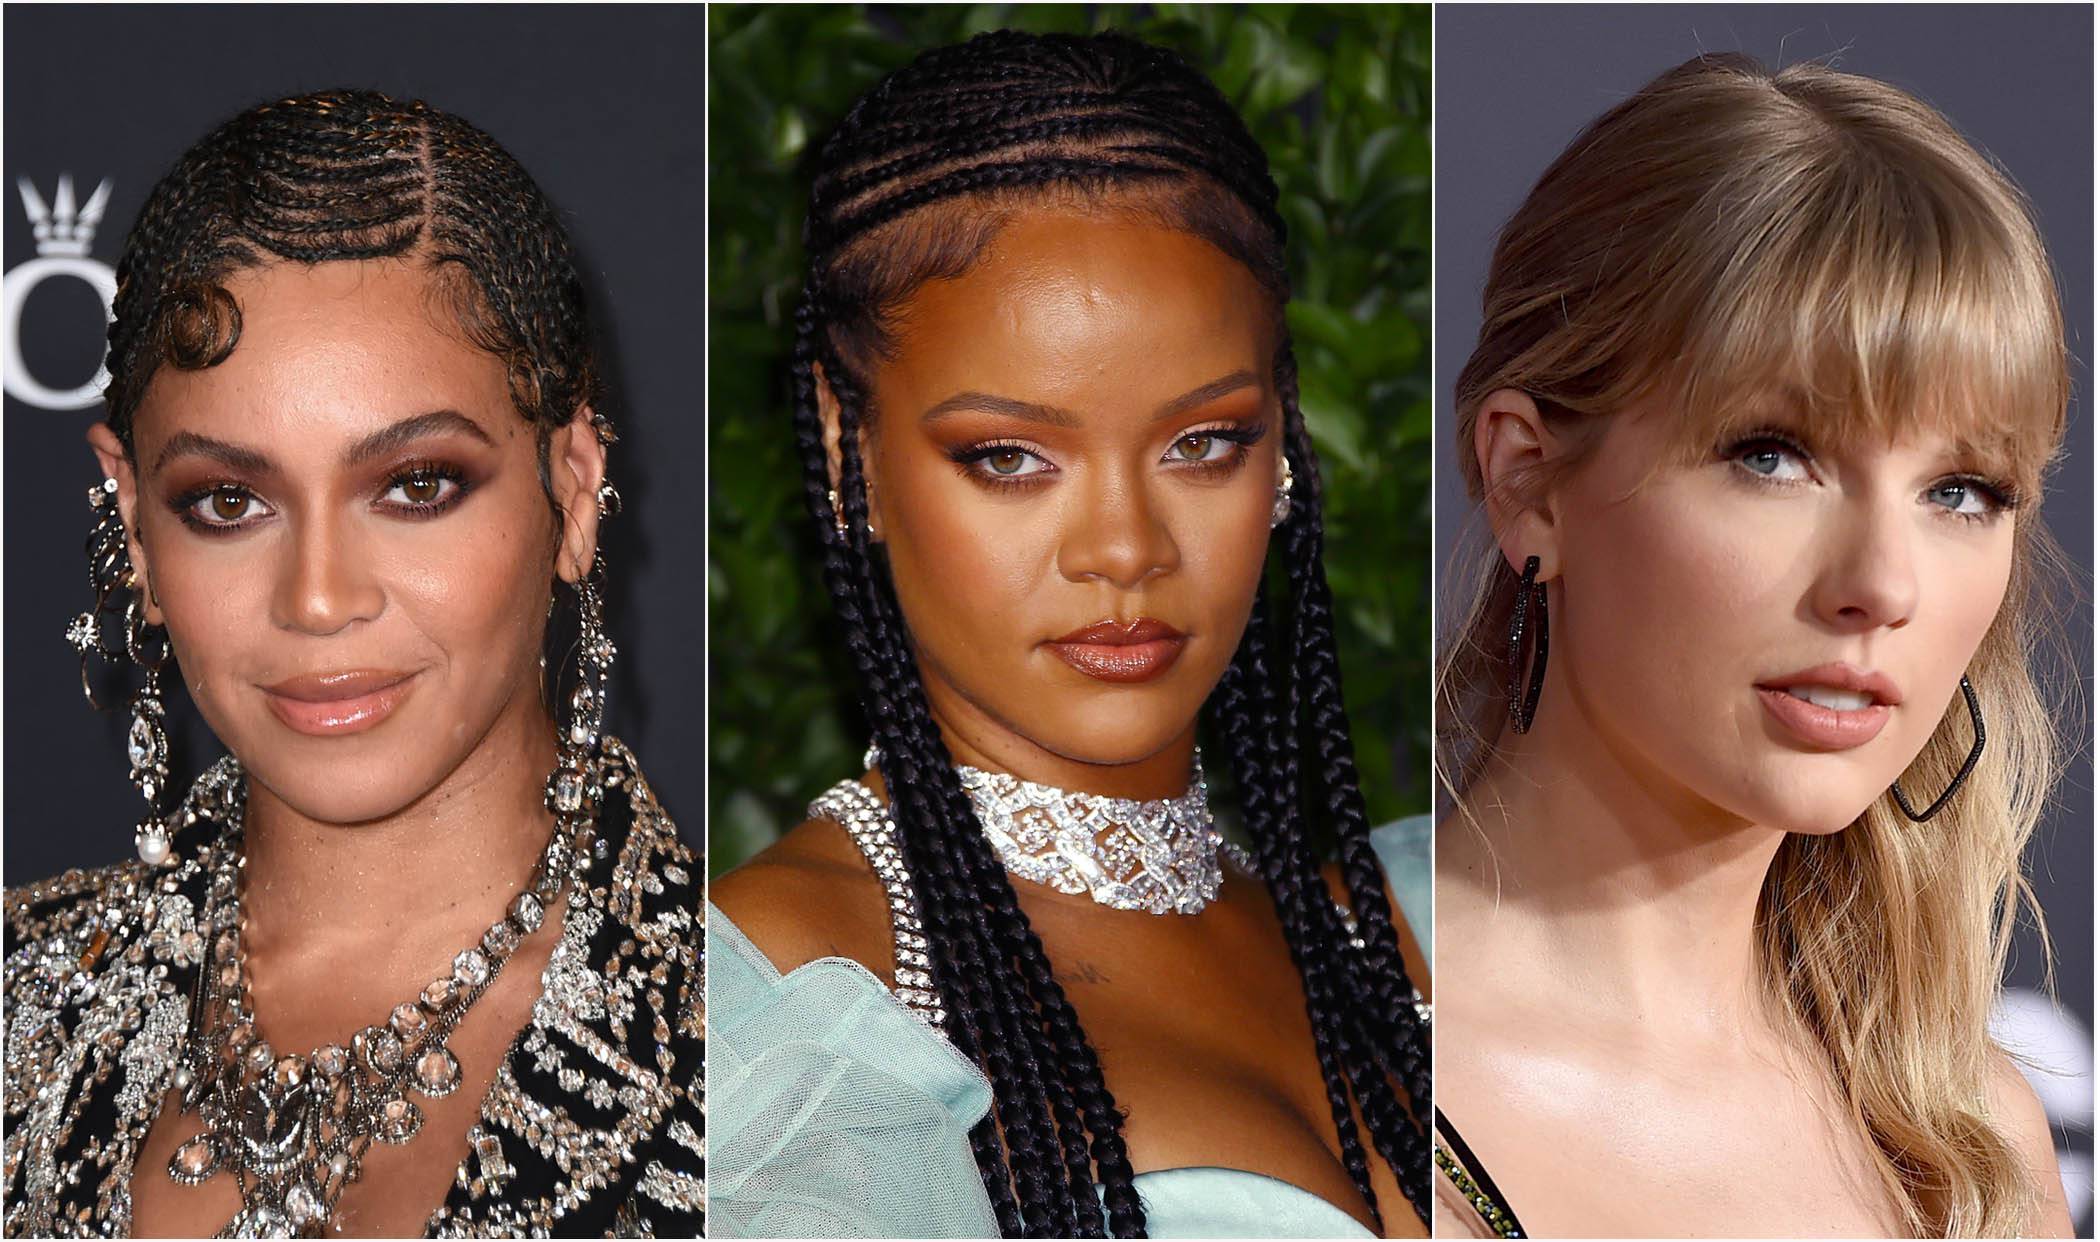 Beyoncé, Rihanna & Taylor Swift make Forbes‘ ’World’s 100 Most Powerful Women’ list